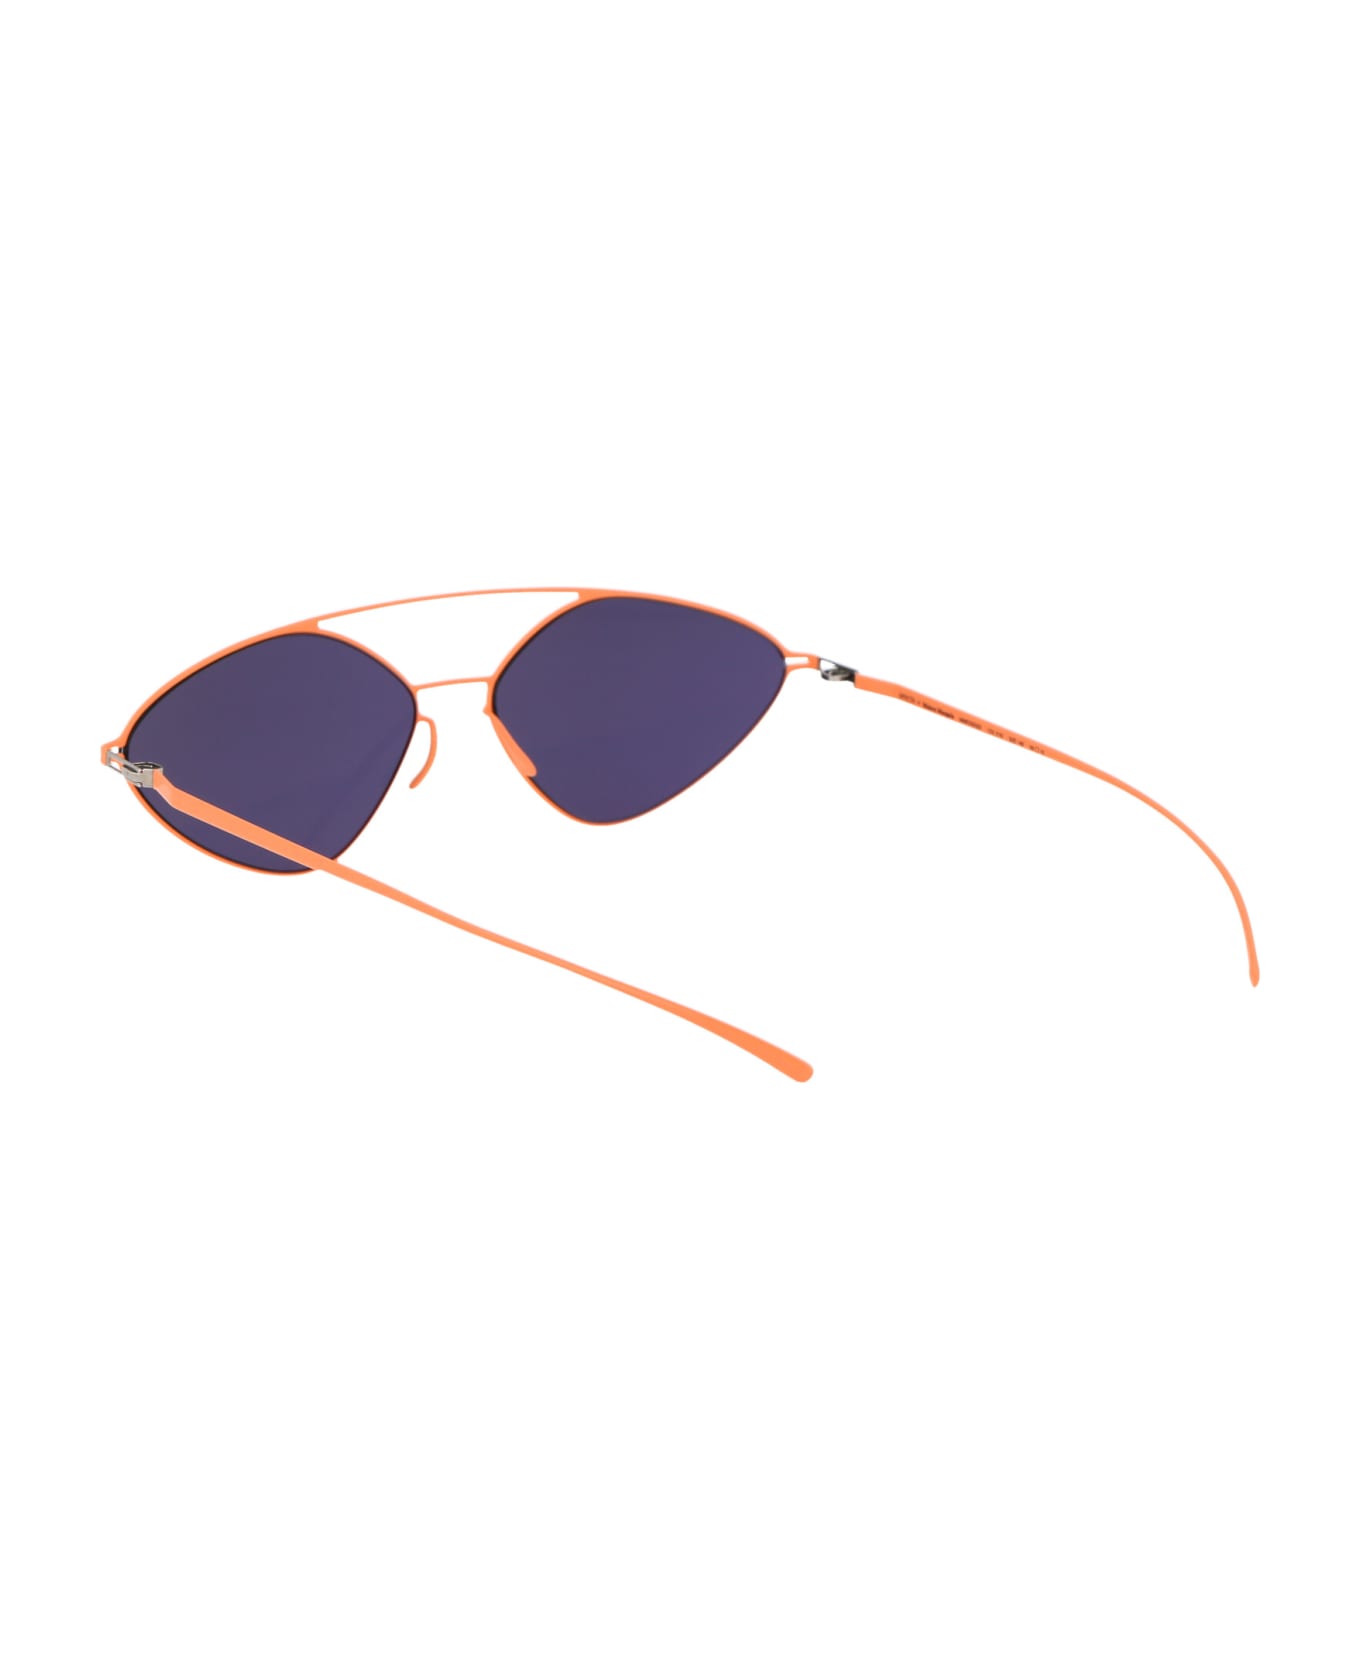 Mykita Mmesse023 Sunglasses - 443 E19 Apricot Indigo Solid